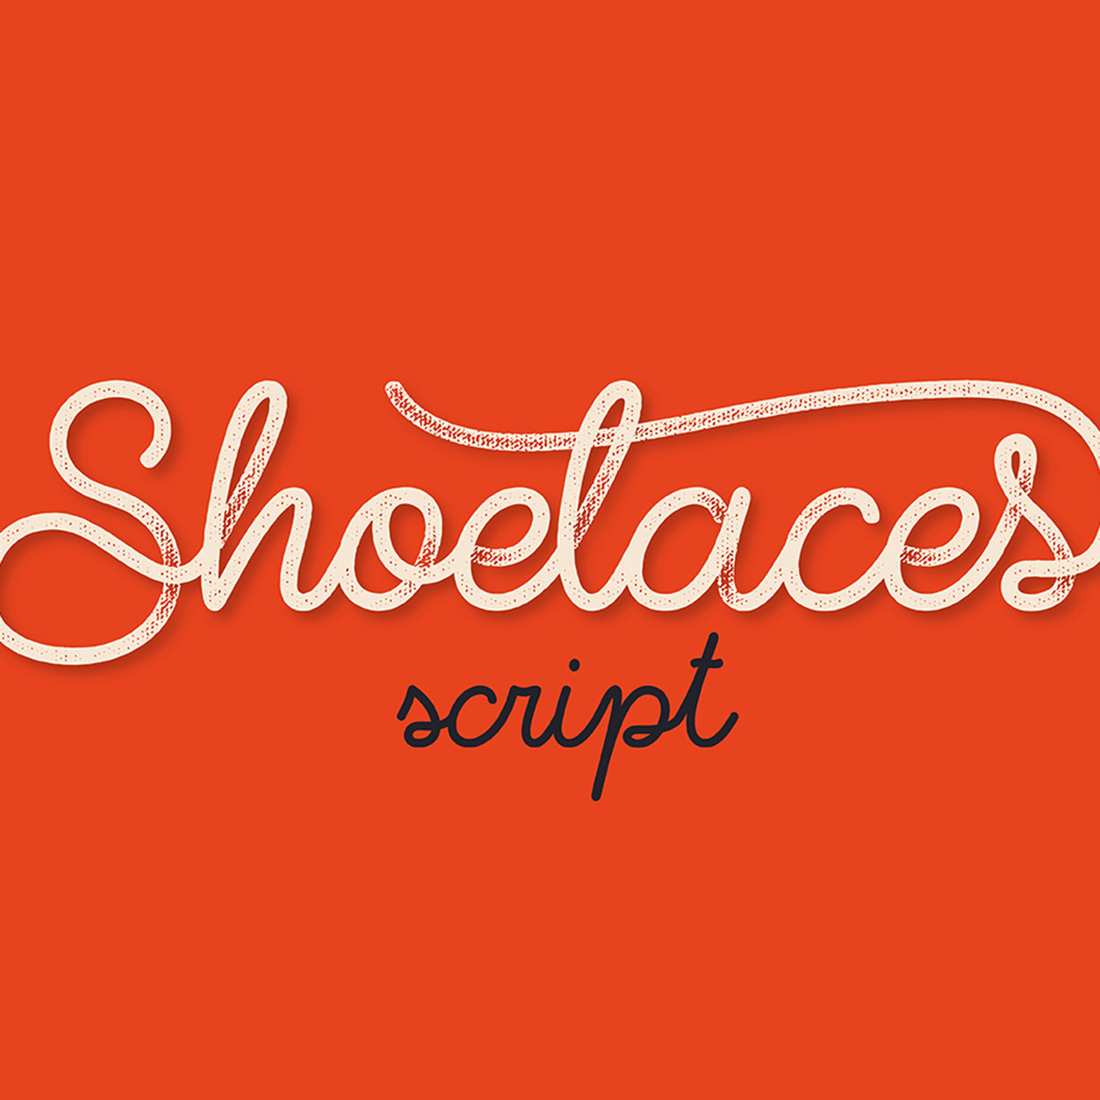 Shoelaces Font main cover.